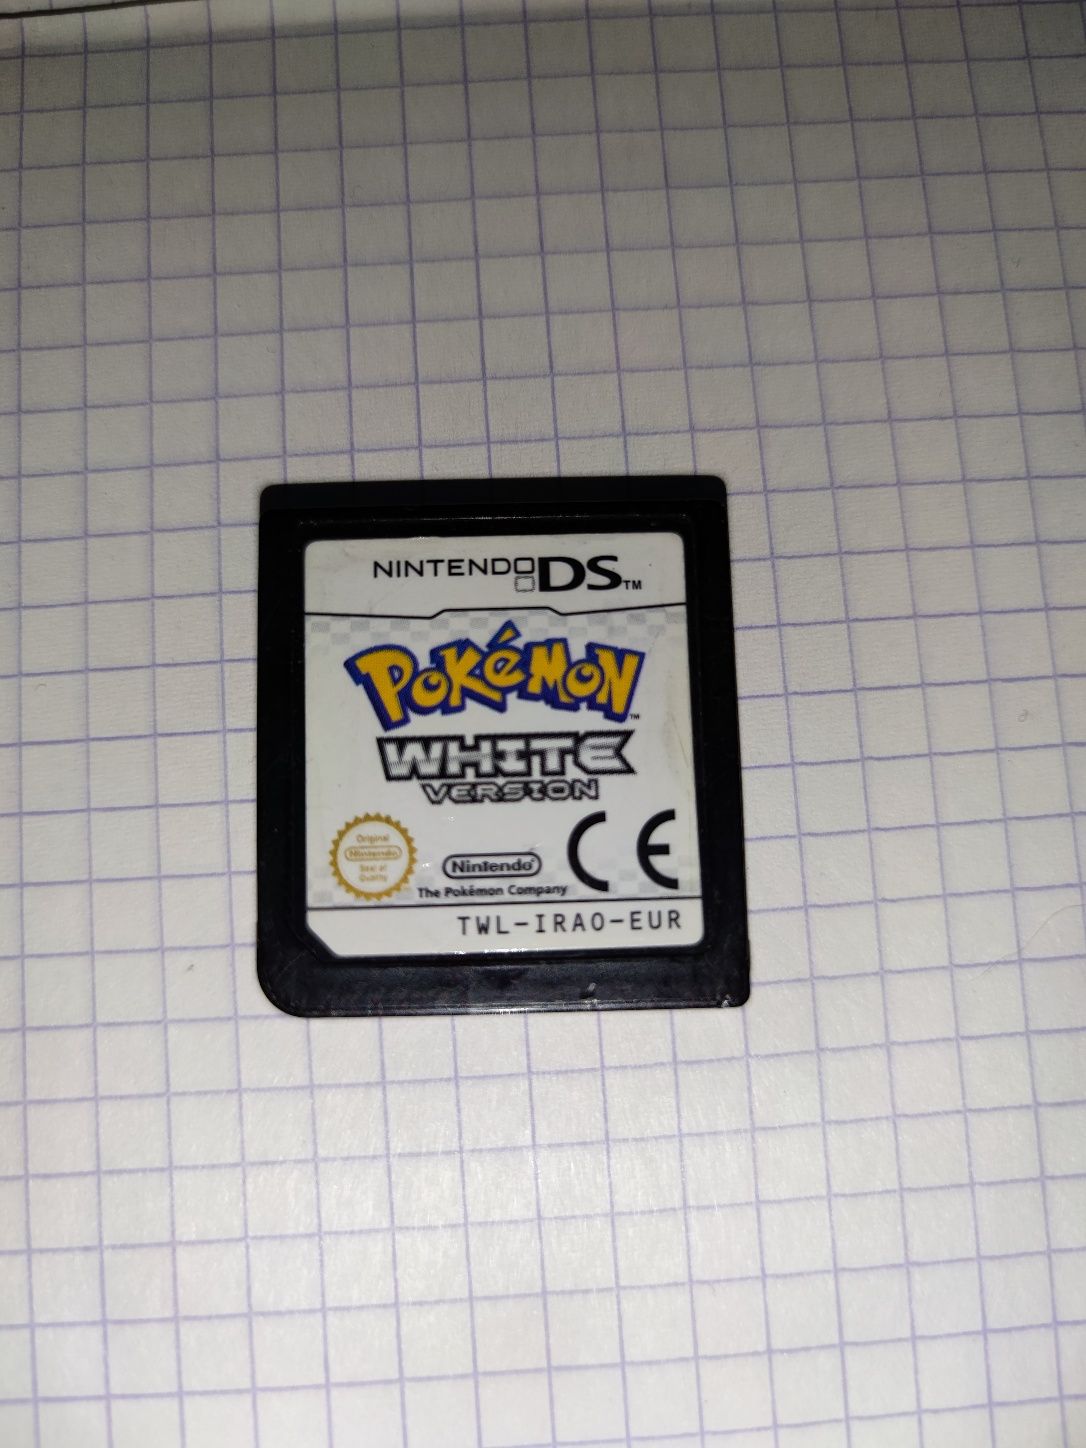 Pokemon DS white version nintendo